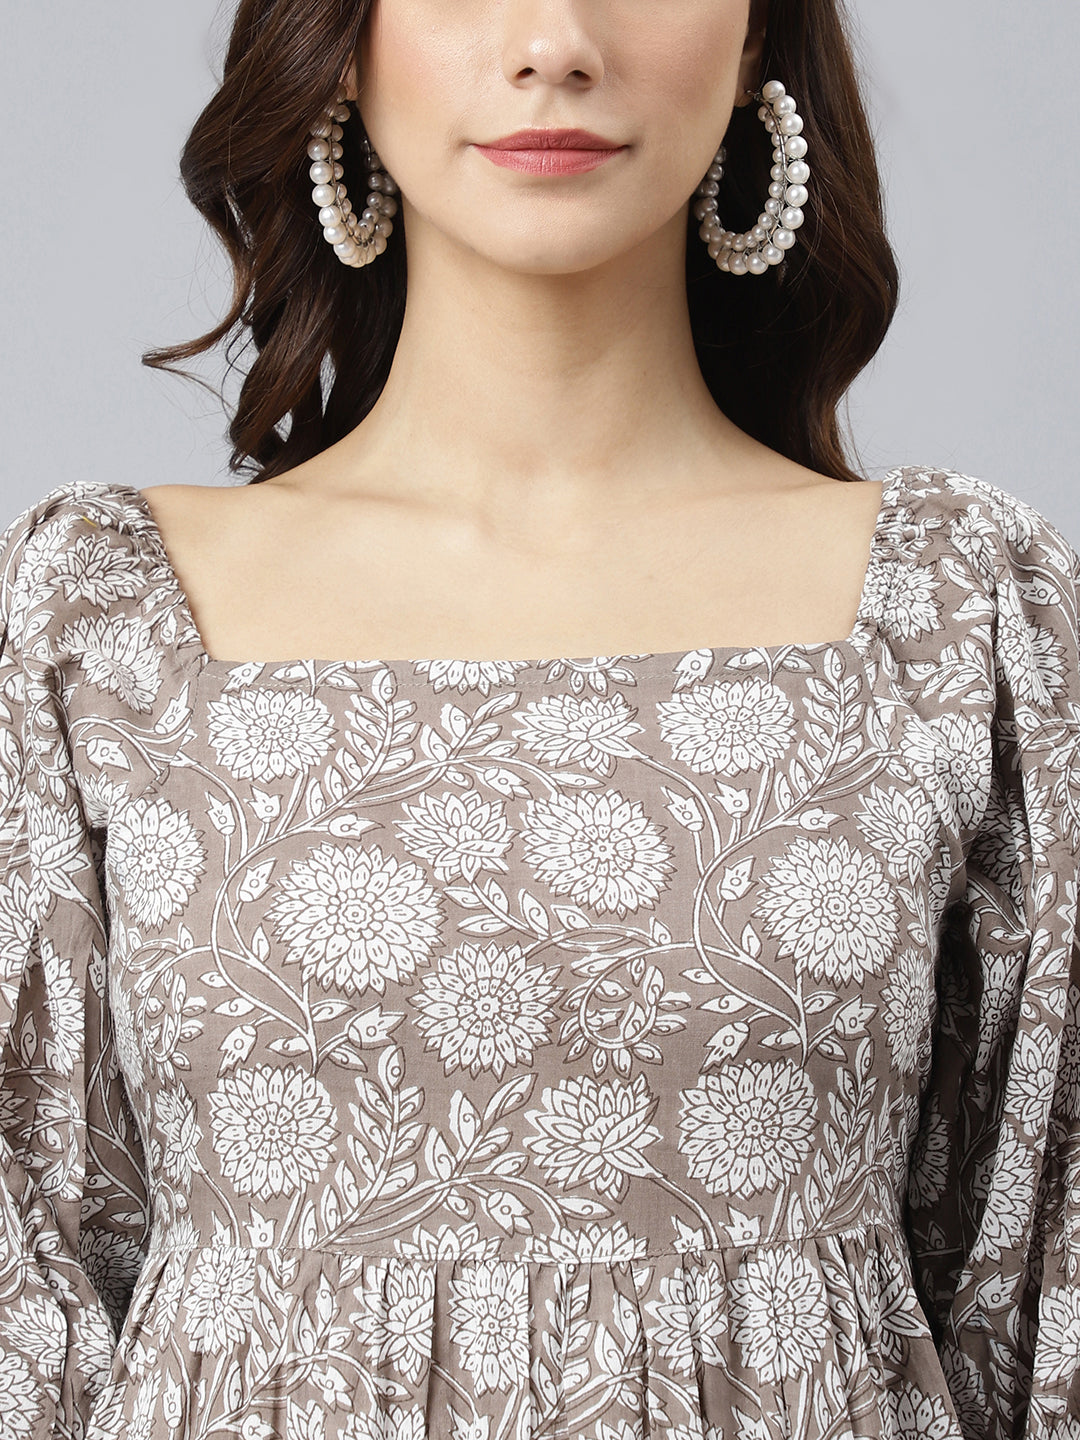 Women's Floral Printed Grey Cotton Dress - Janasya